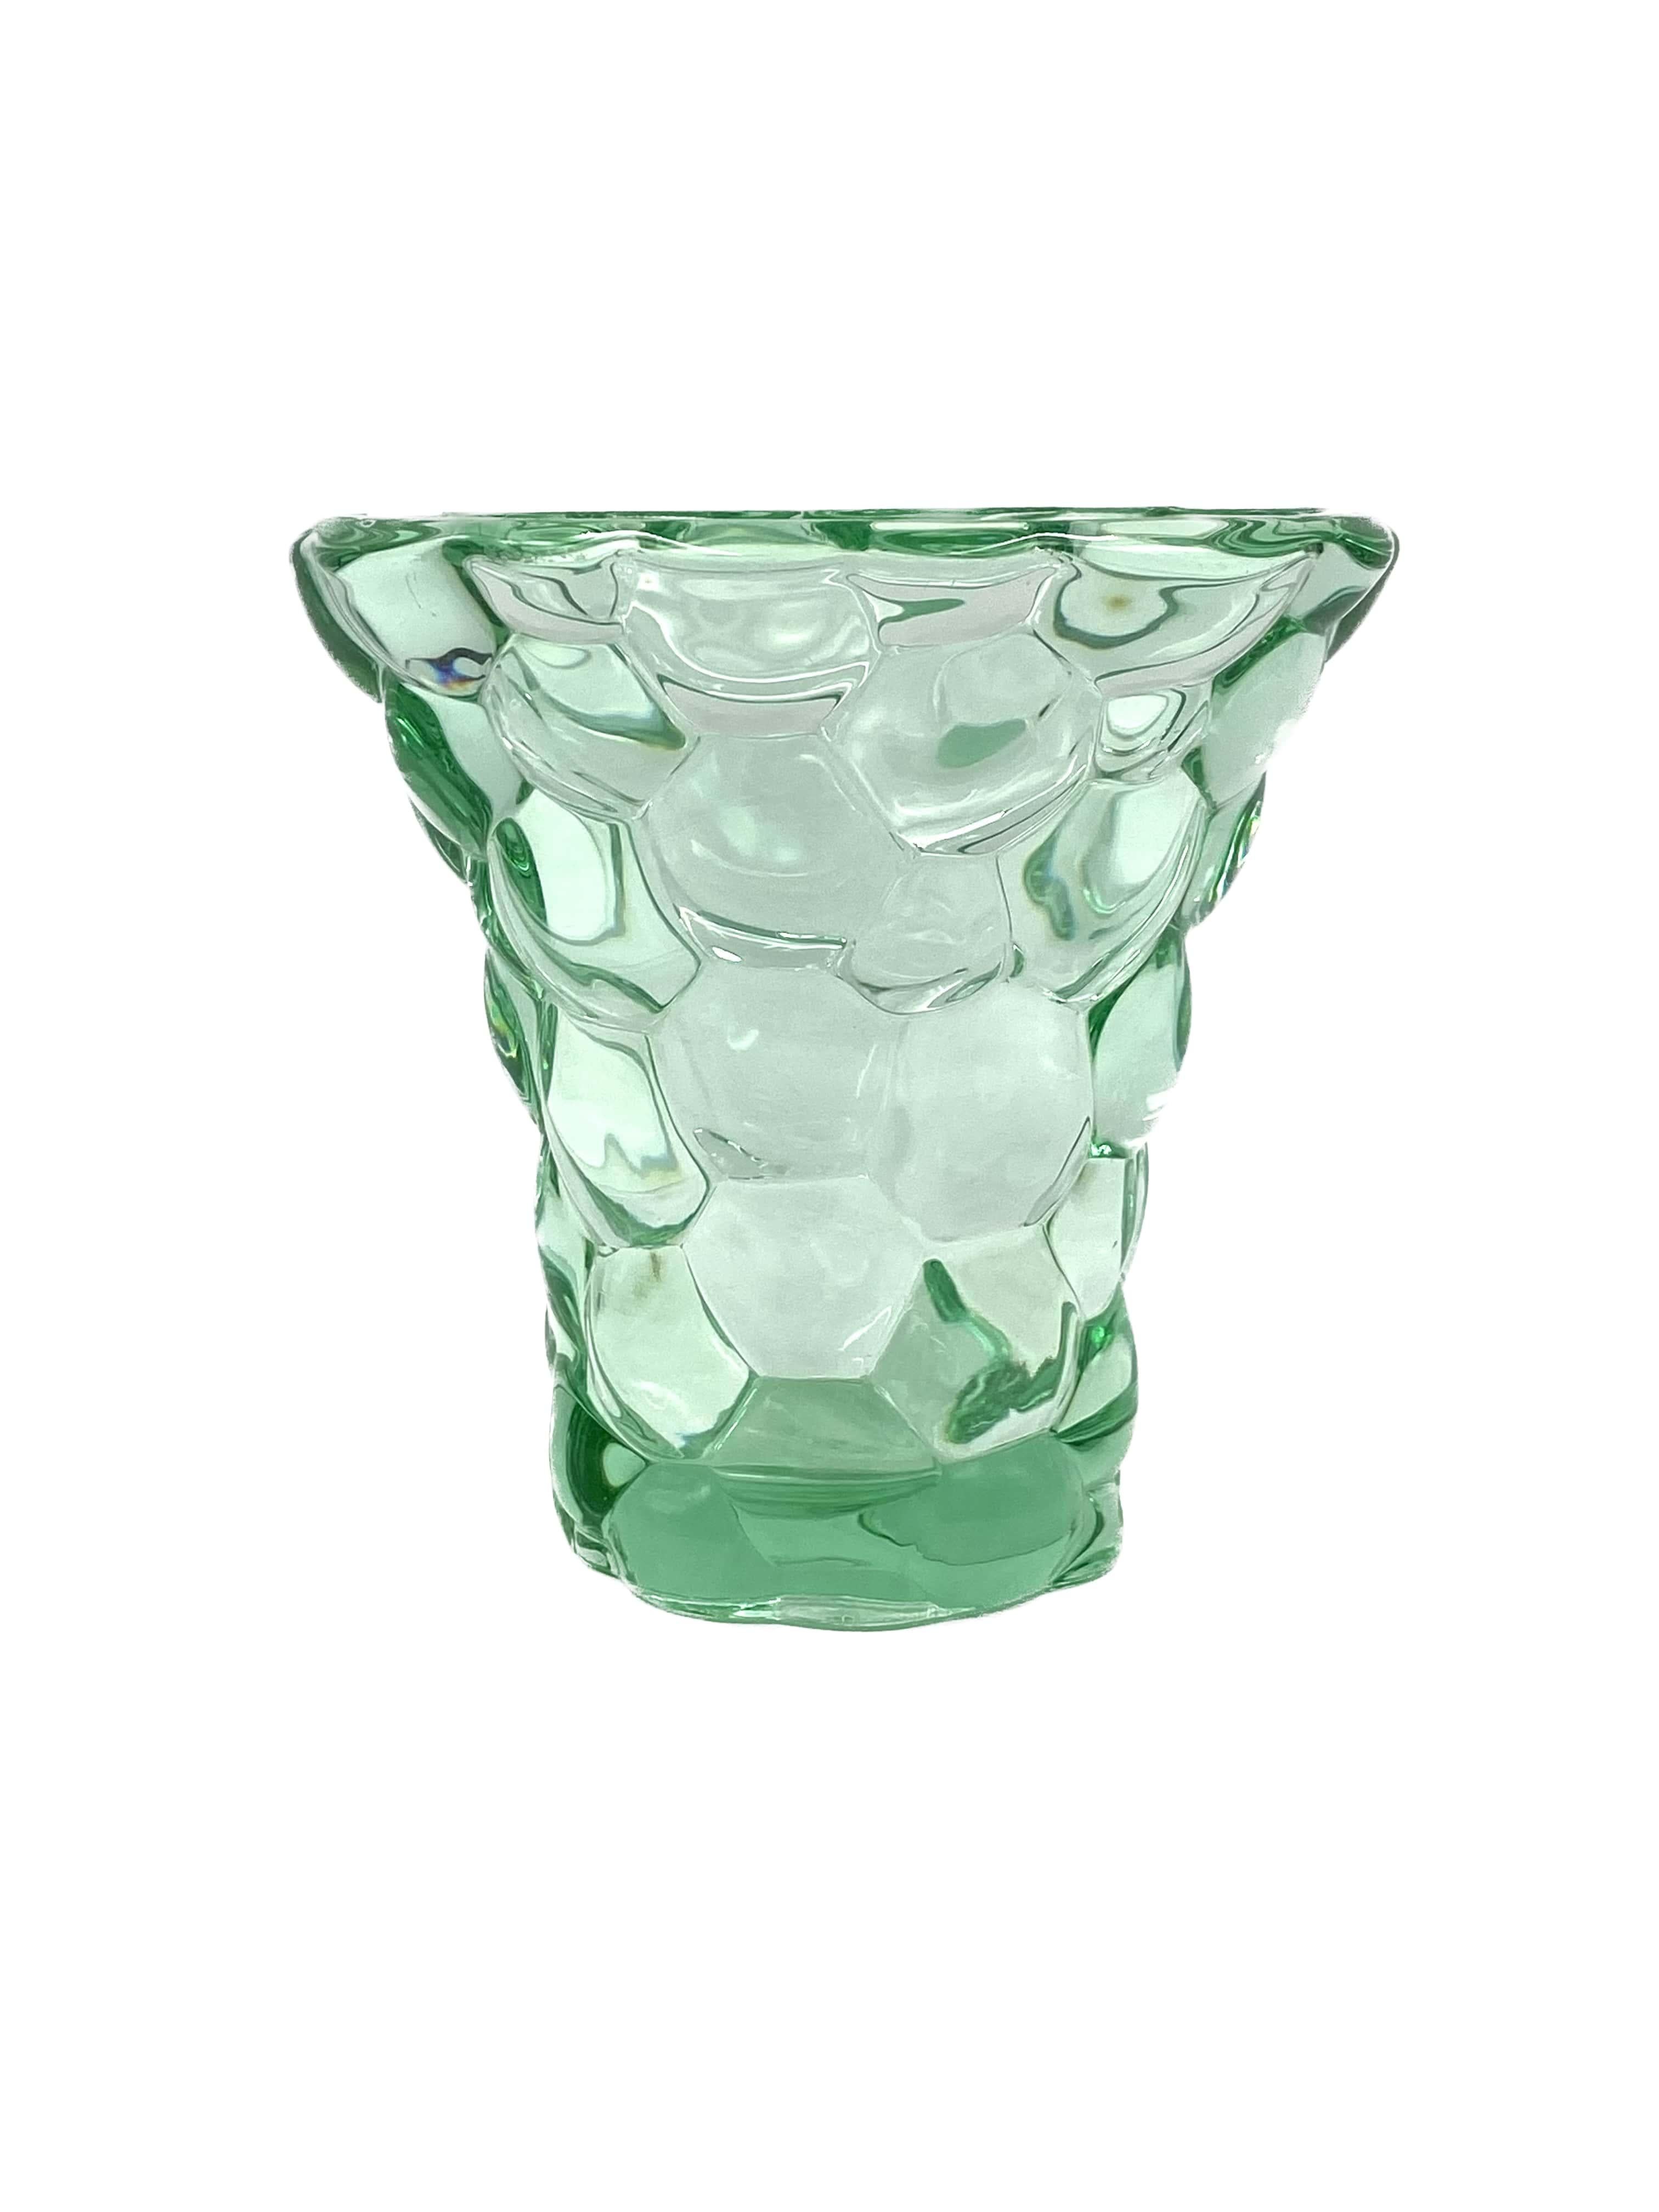 Pierre D'Avesn, Vase en cristal vert d'eau 